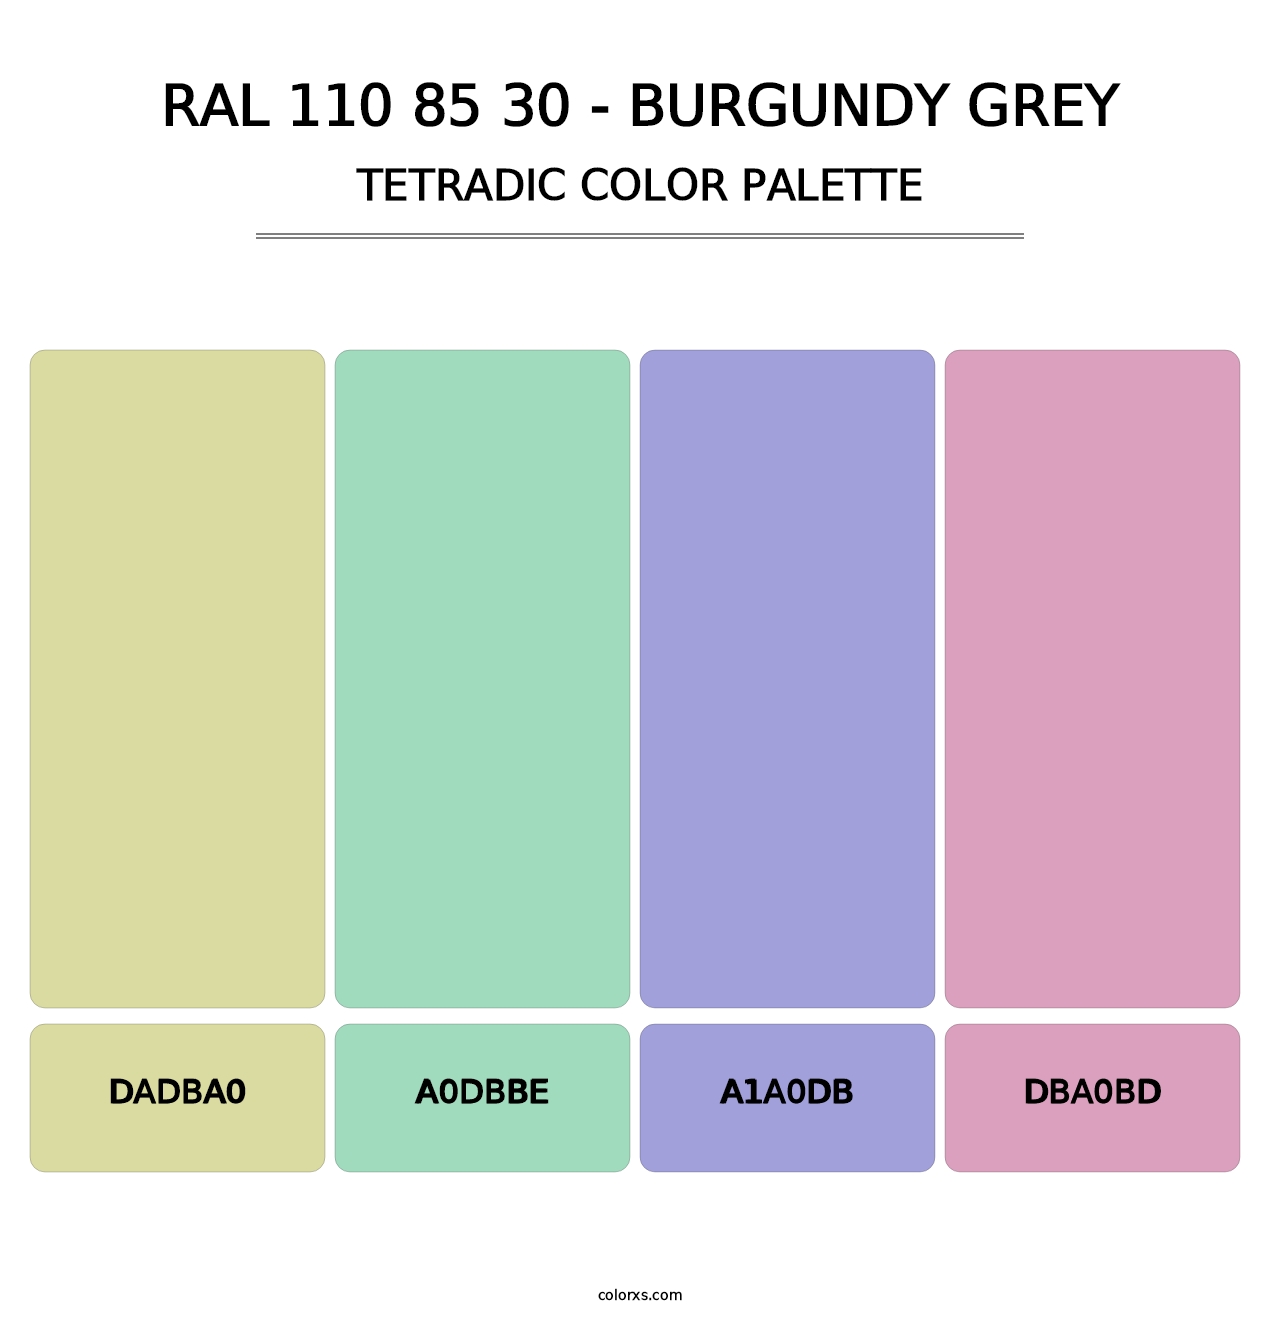 RAL 110 85 30 - Burgundy Grey - Tetradic Color Palette